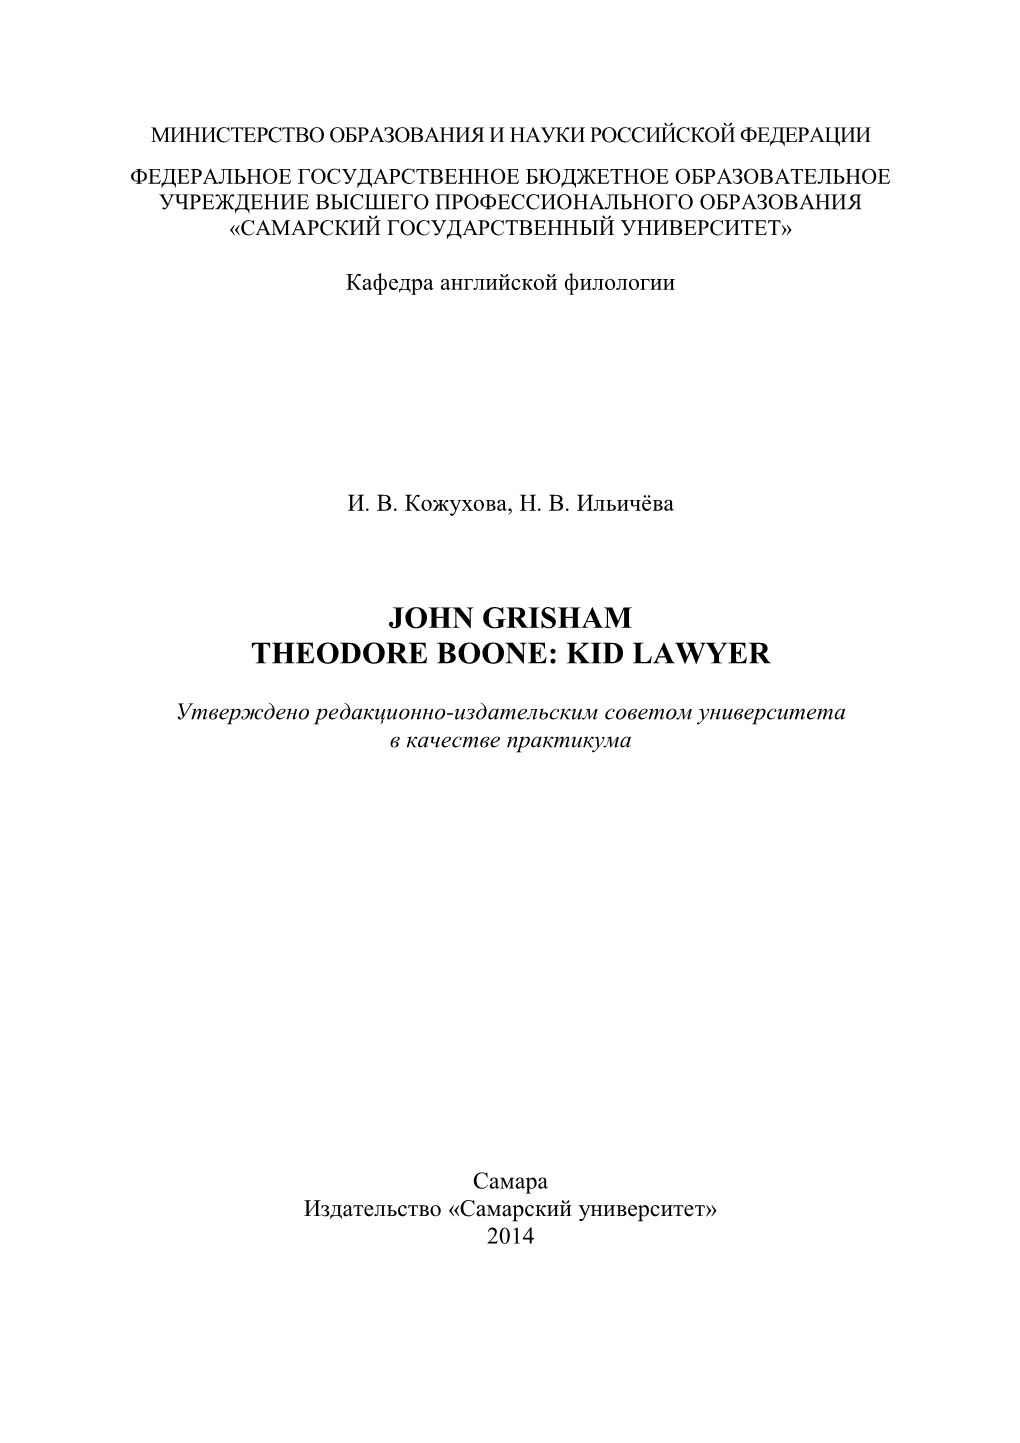 John Grisham Theodore Boone: Kid Lawyer